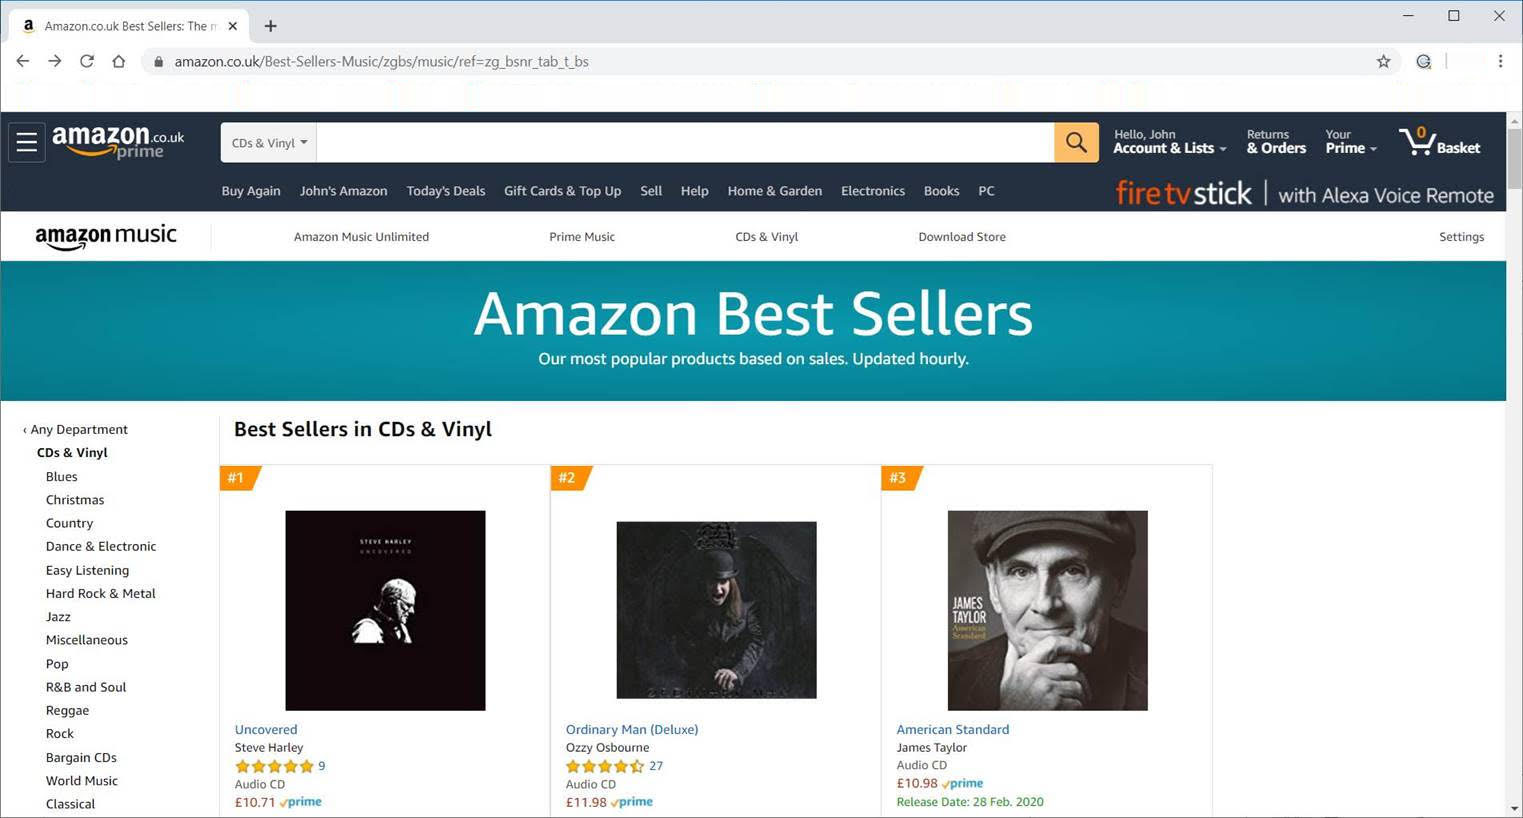 Amazon Best Sellers #1